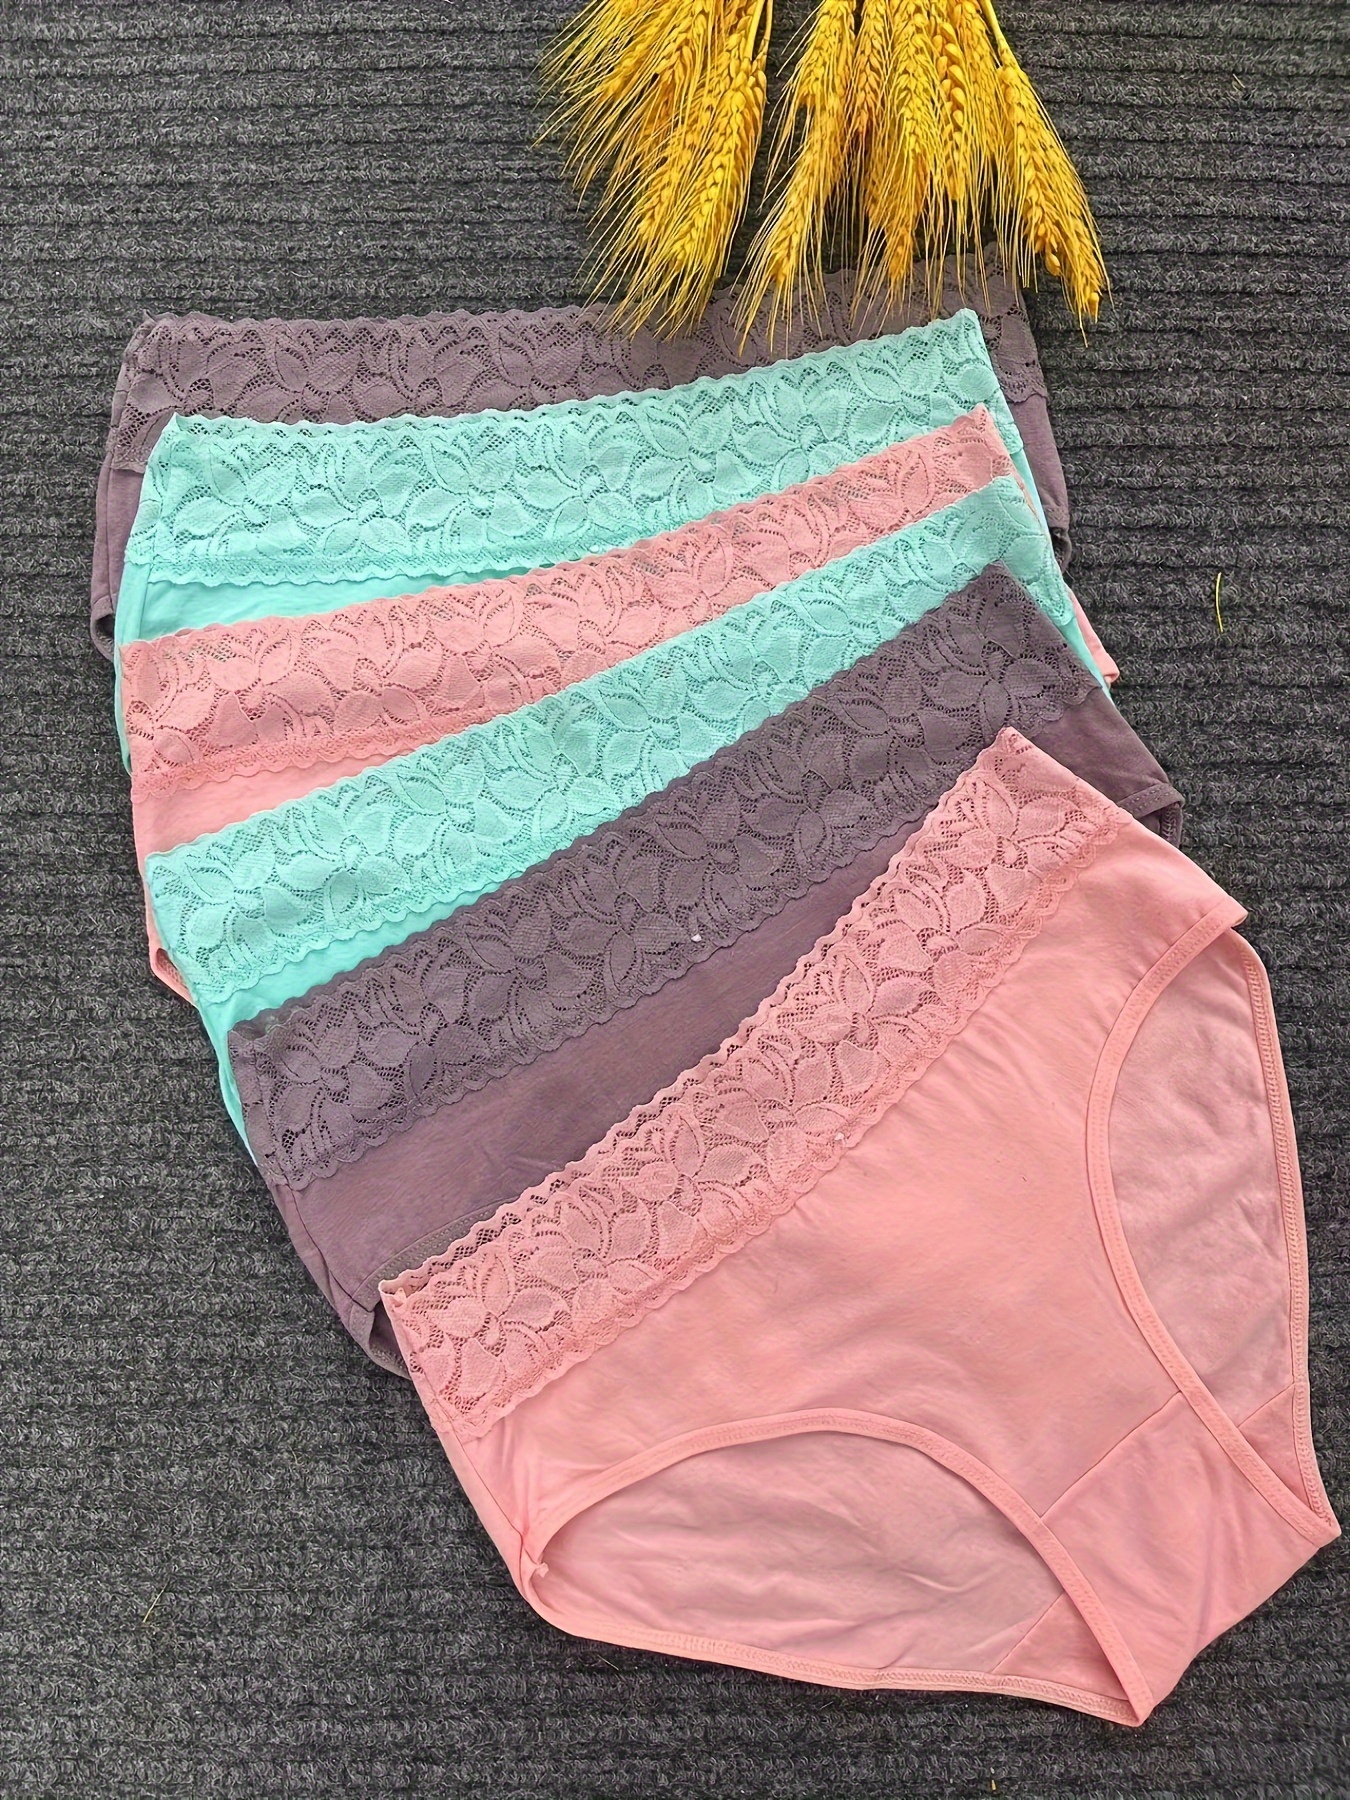 6pcs Contrast Lace Briefs, Comfy & Breathable Stretchy Intimates Panties,  Women's Lingerie & Underwear